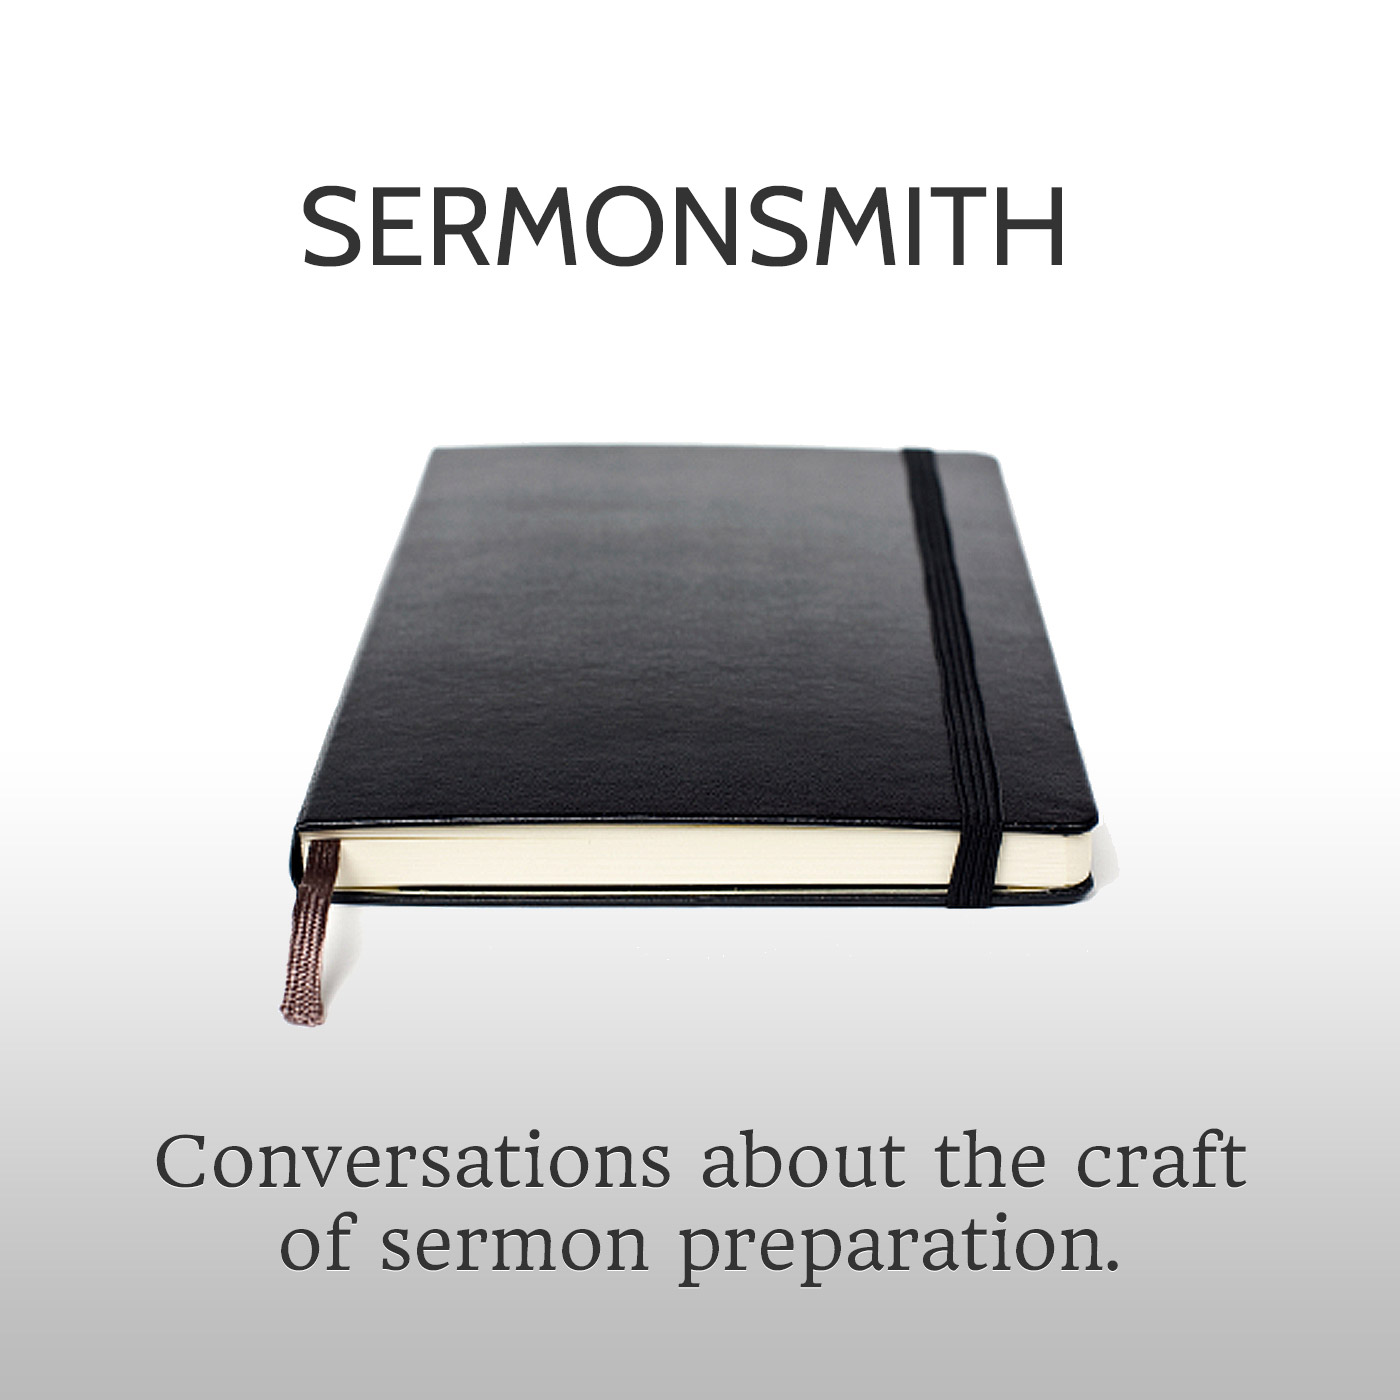 Sermonsmith